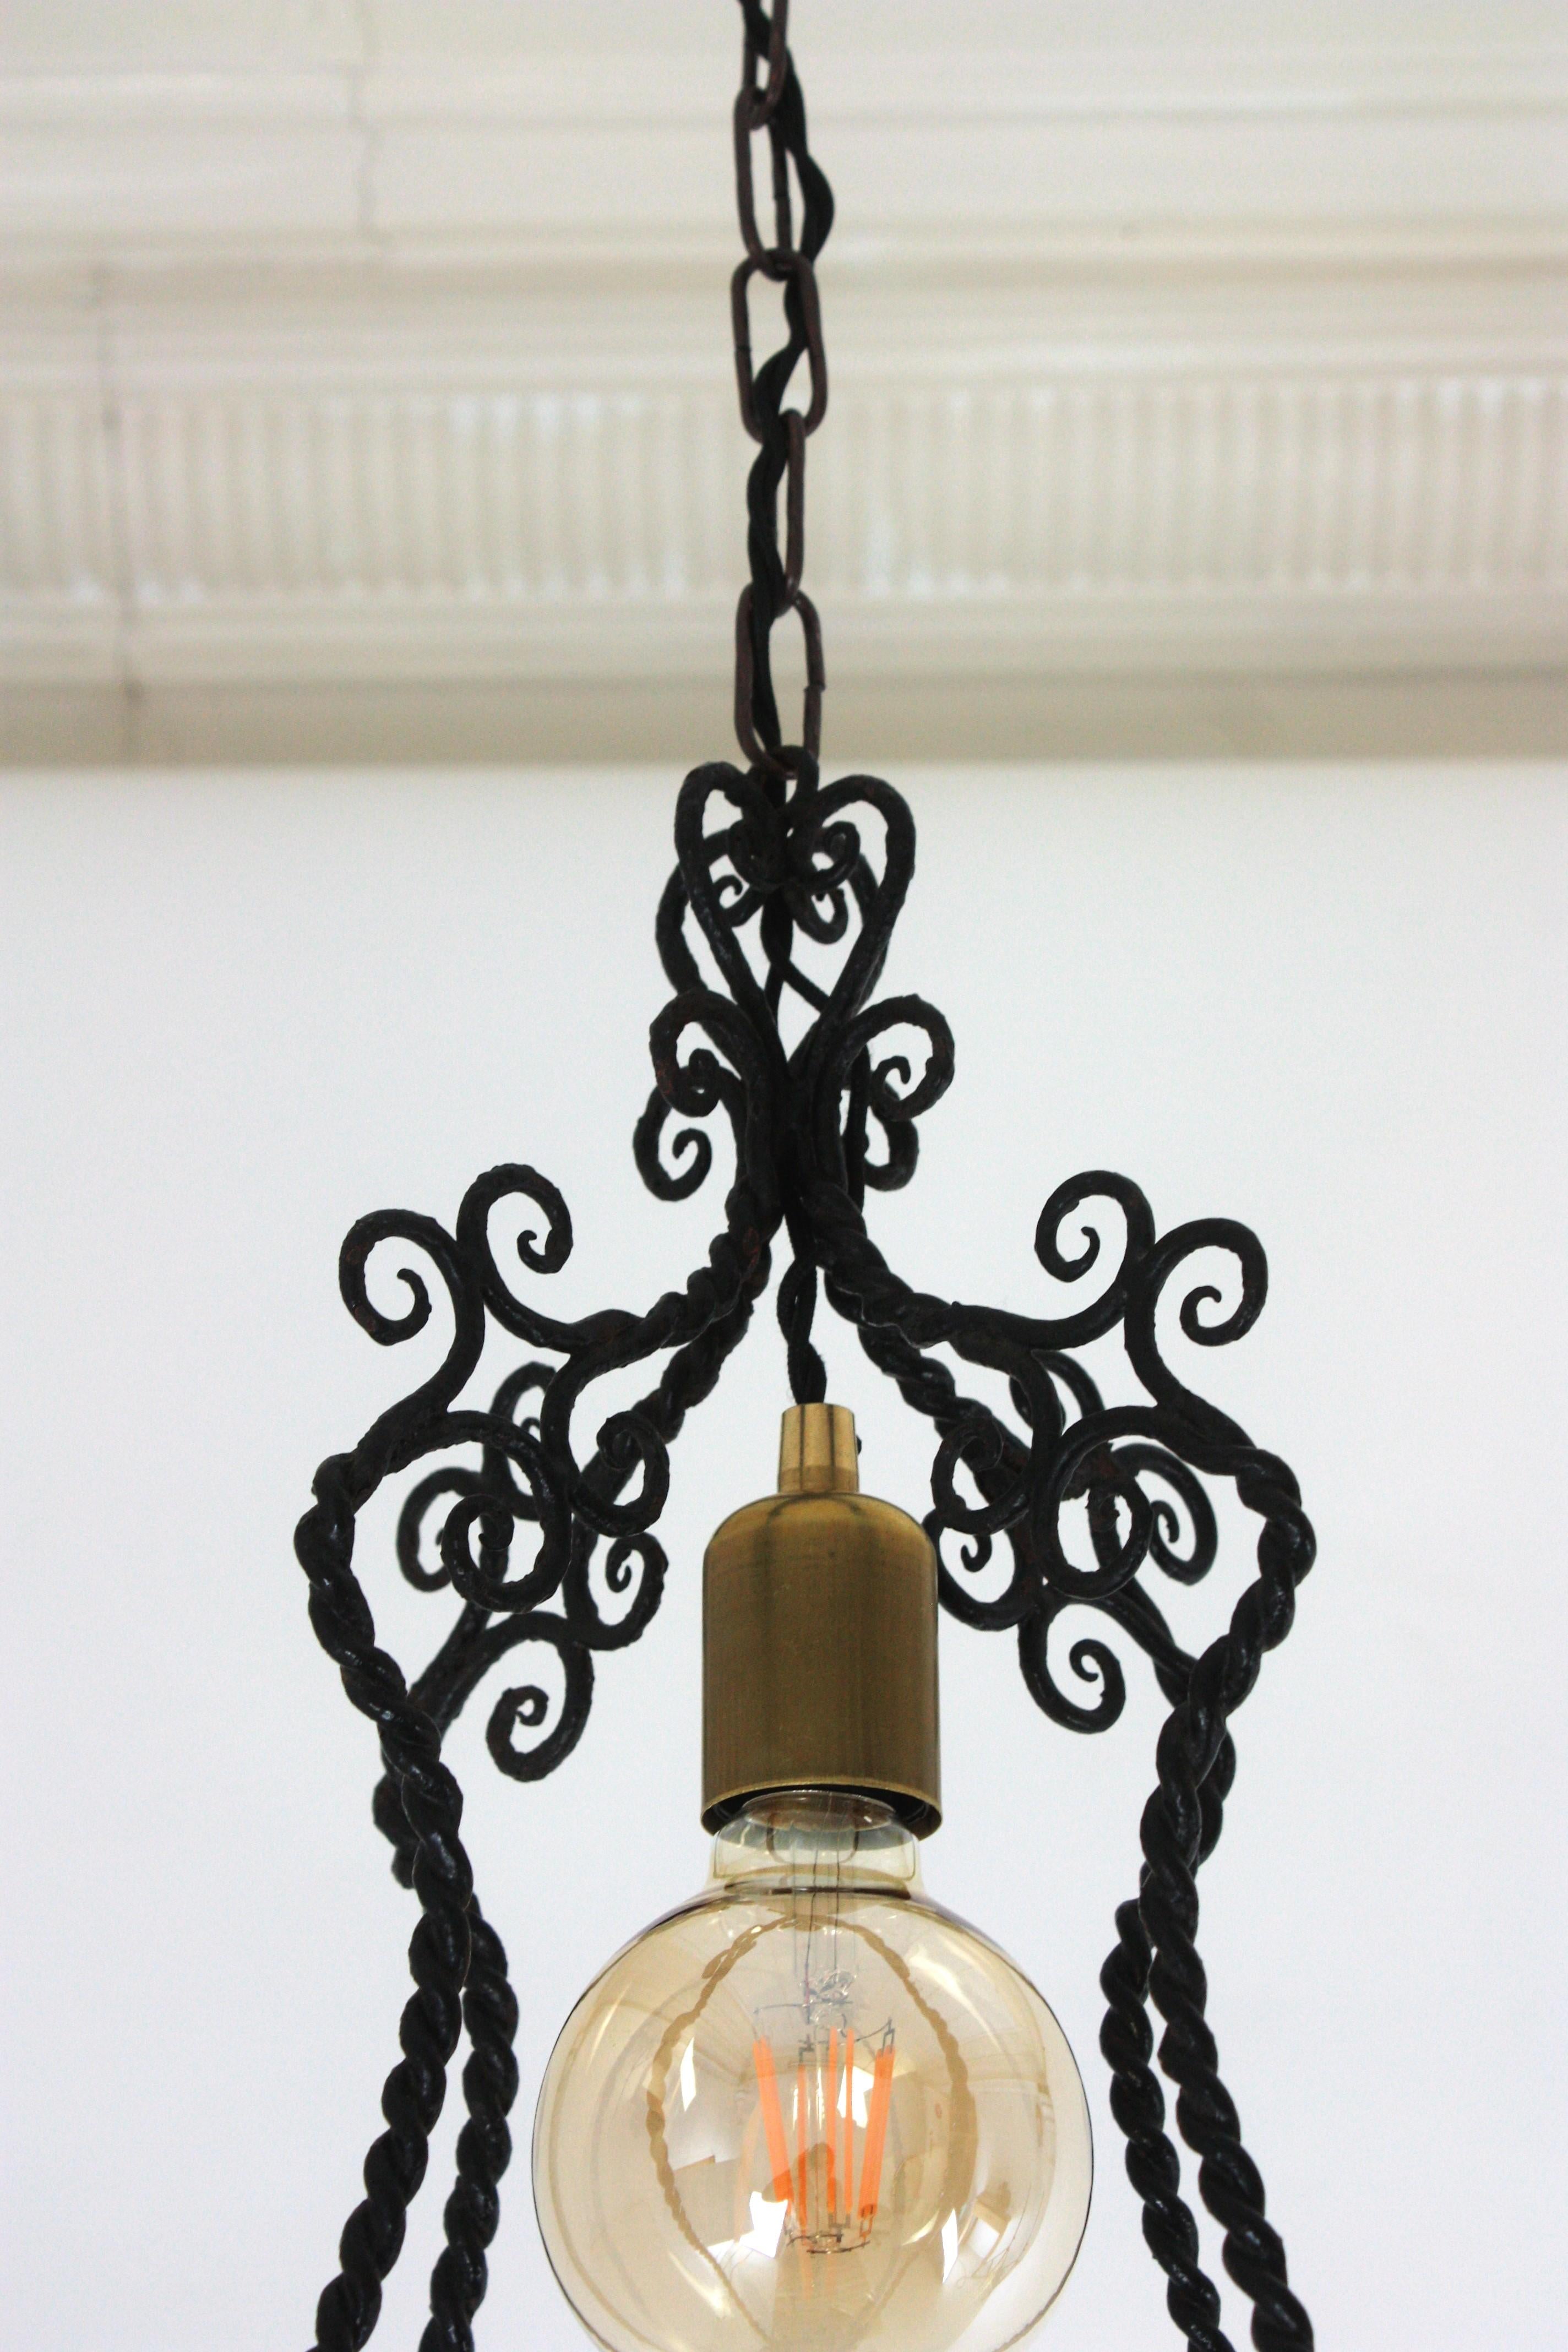 Spanish Lantern Pendant Lamp in Wrought Iron, Scroll Twisting Design, 1940s For Sale 3